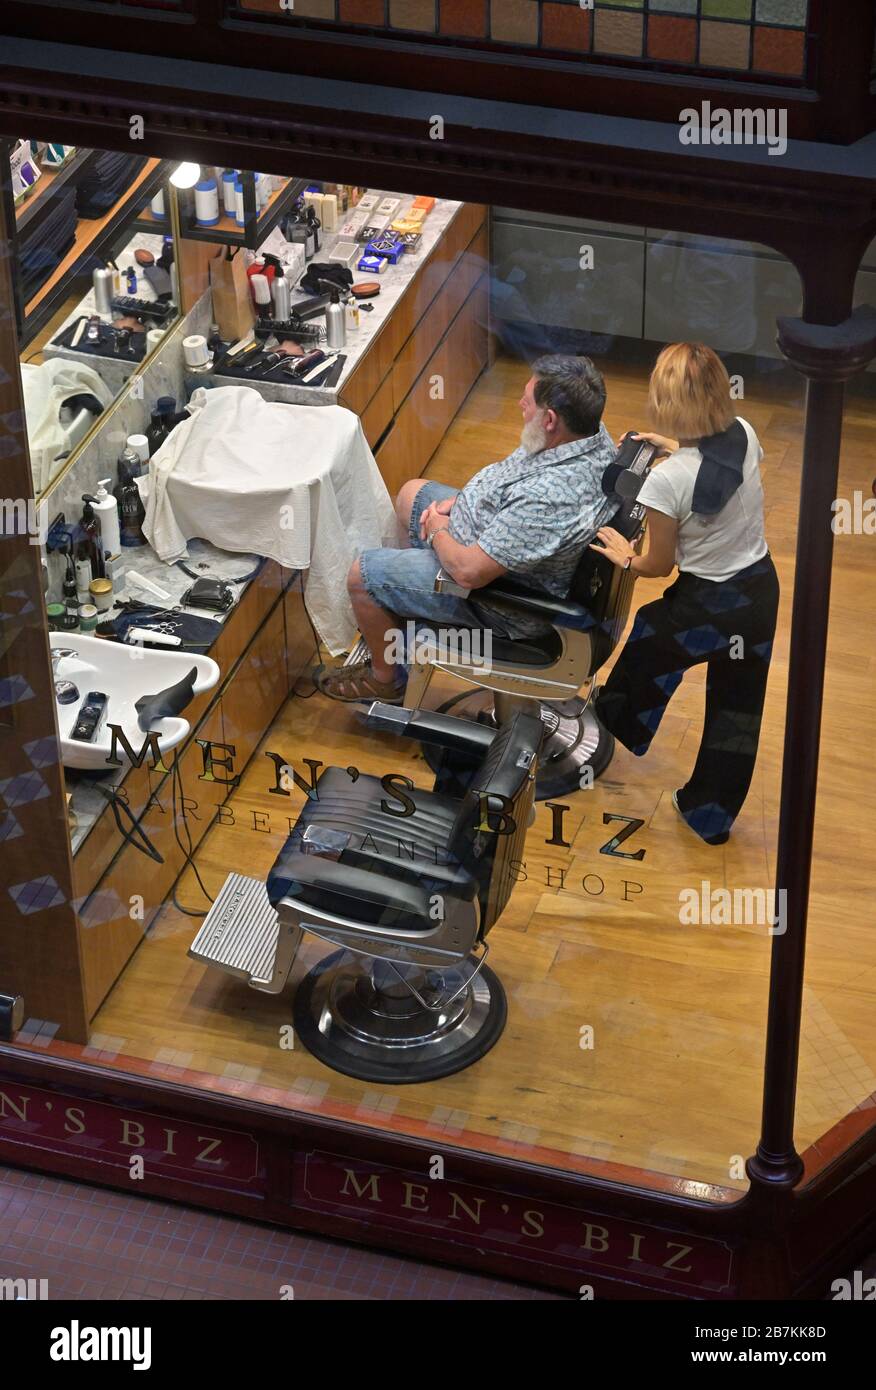 Men's Biz barber at the historic Strand Arcade, Sydney NSW Stock Photo